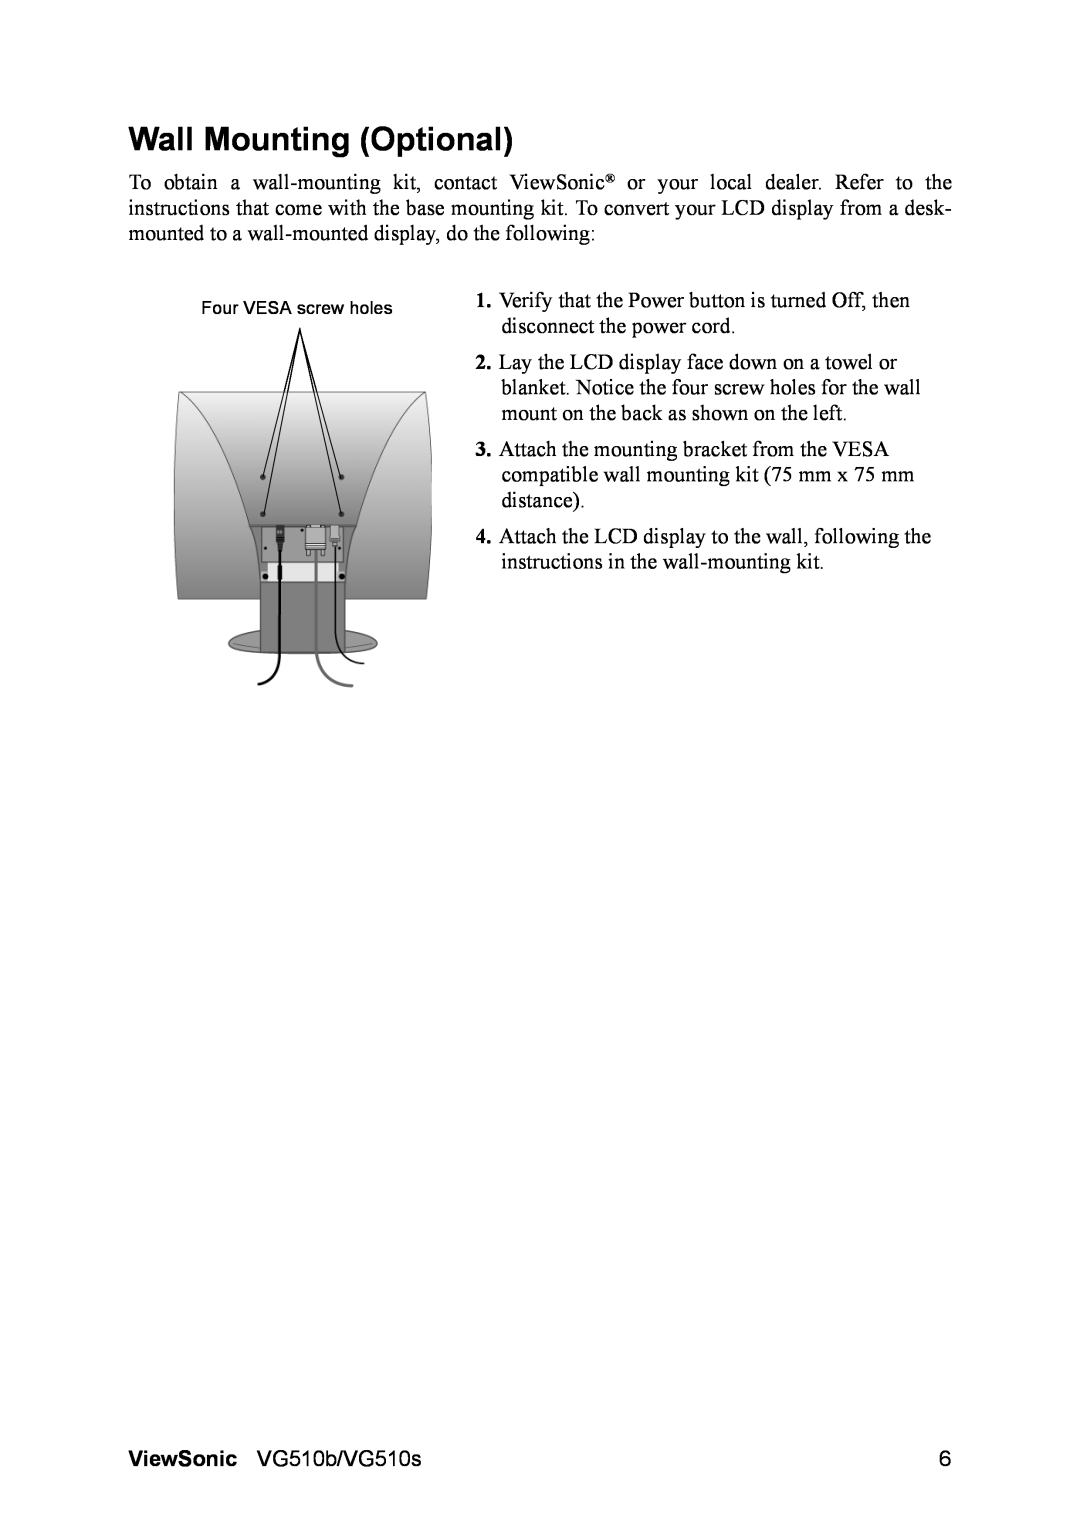 ViewSonic VG510b-1 manual Wall Mounting Optional, Four VESA screw holes 